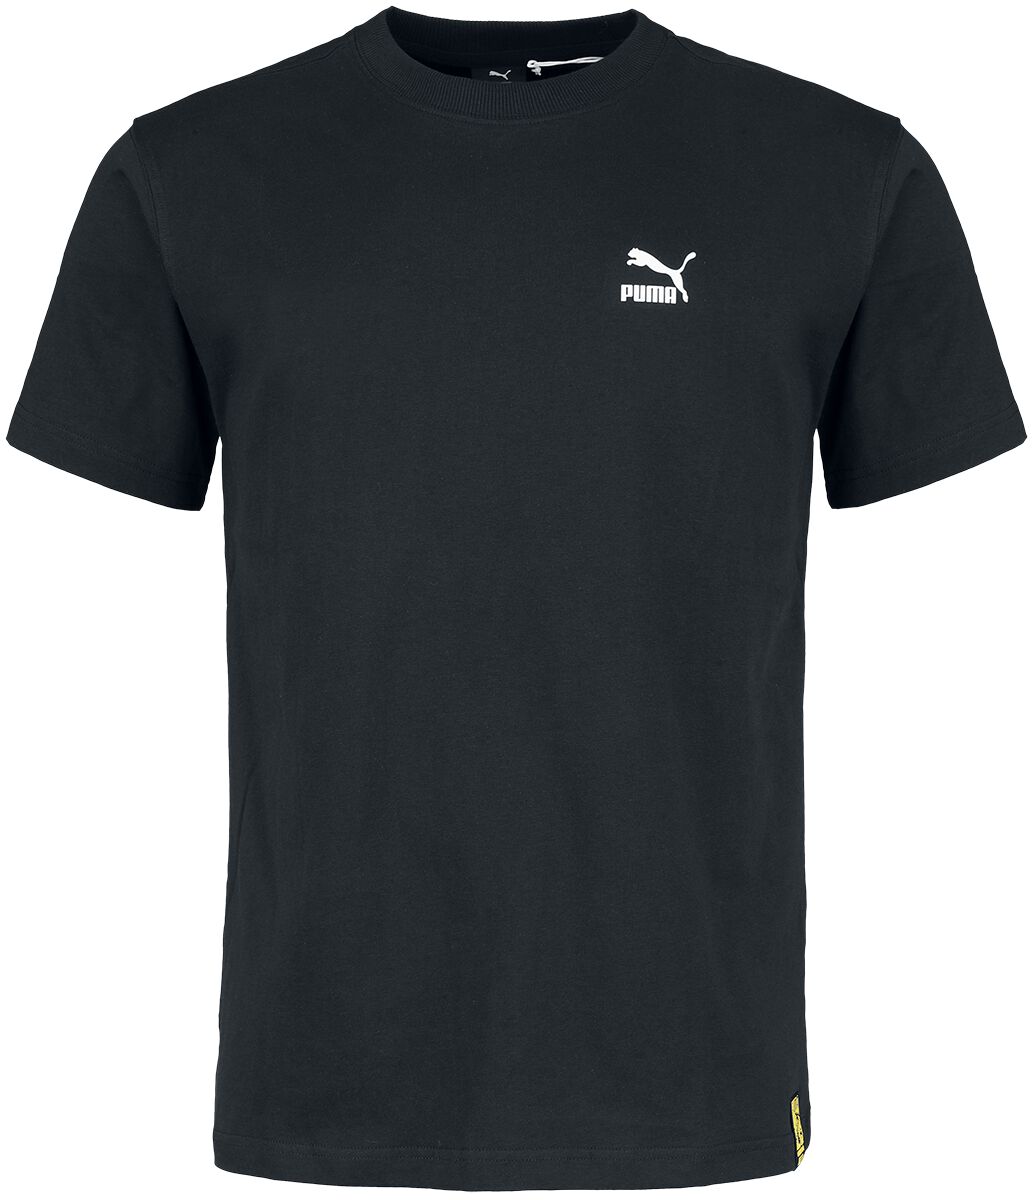 Puma PUMA X STAPLE Tee T-Shirt schwarz in M